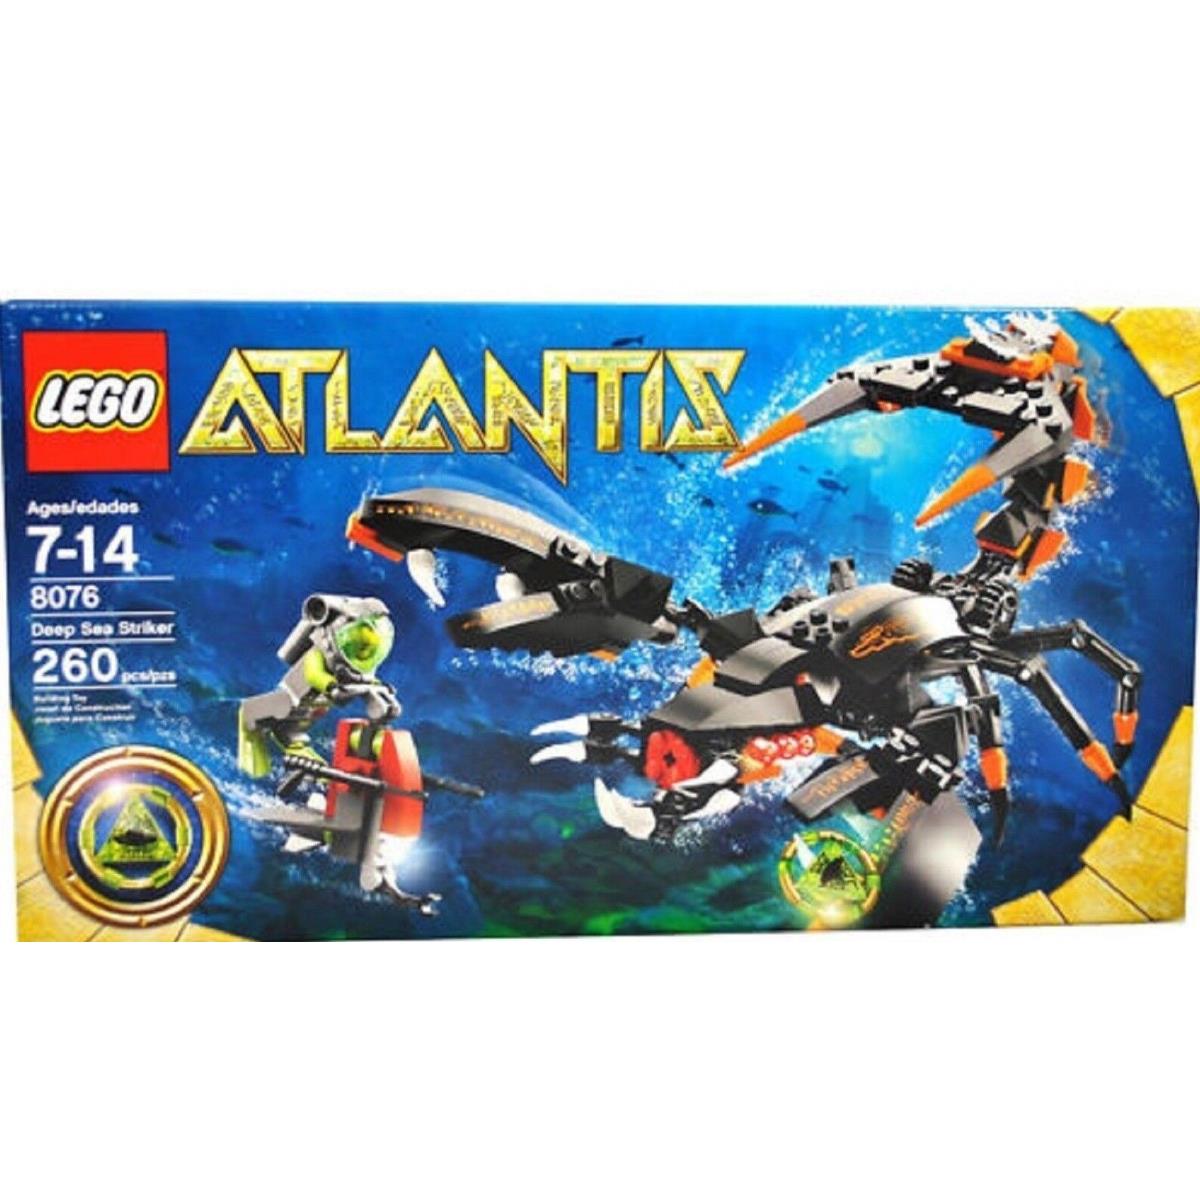 Lego 8076 Atlantis Set Deep Sea Striker Diver 260 Pieces